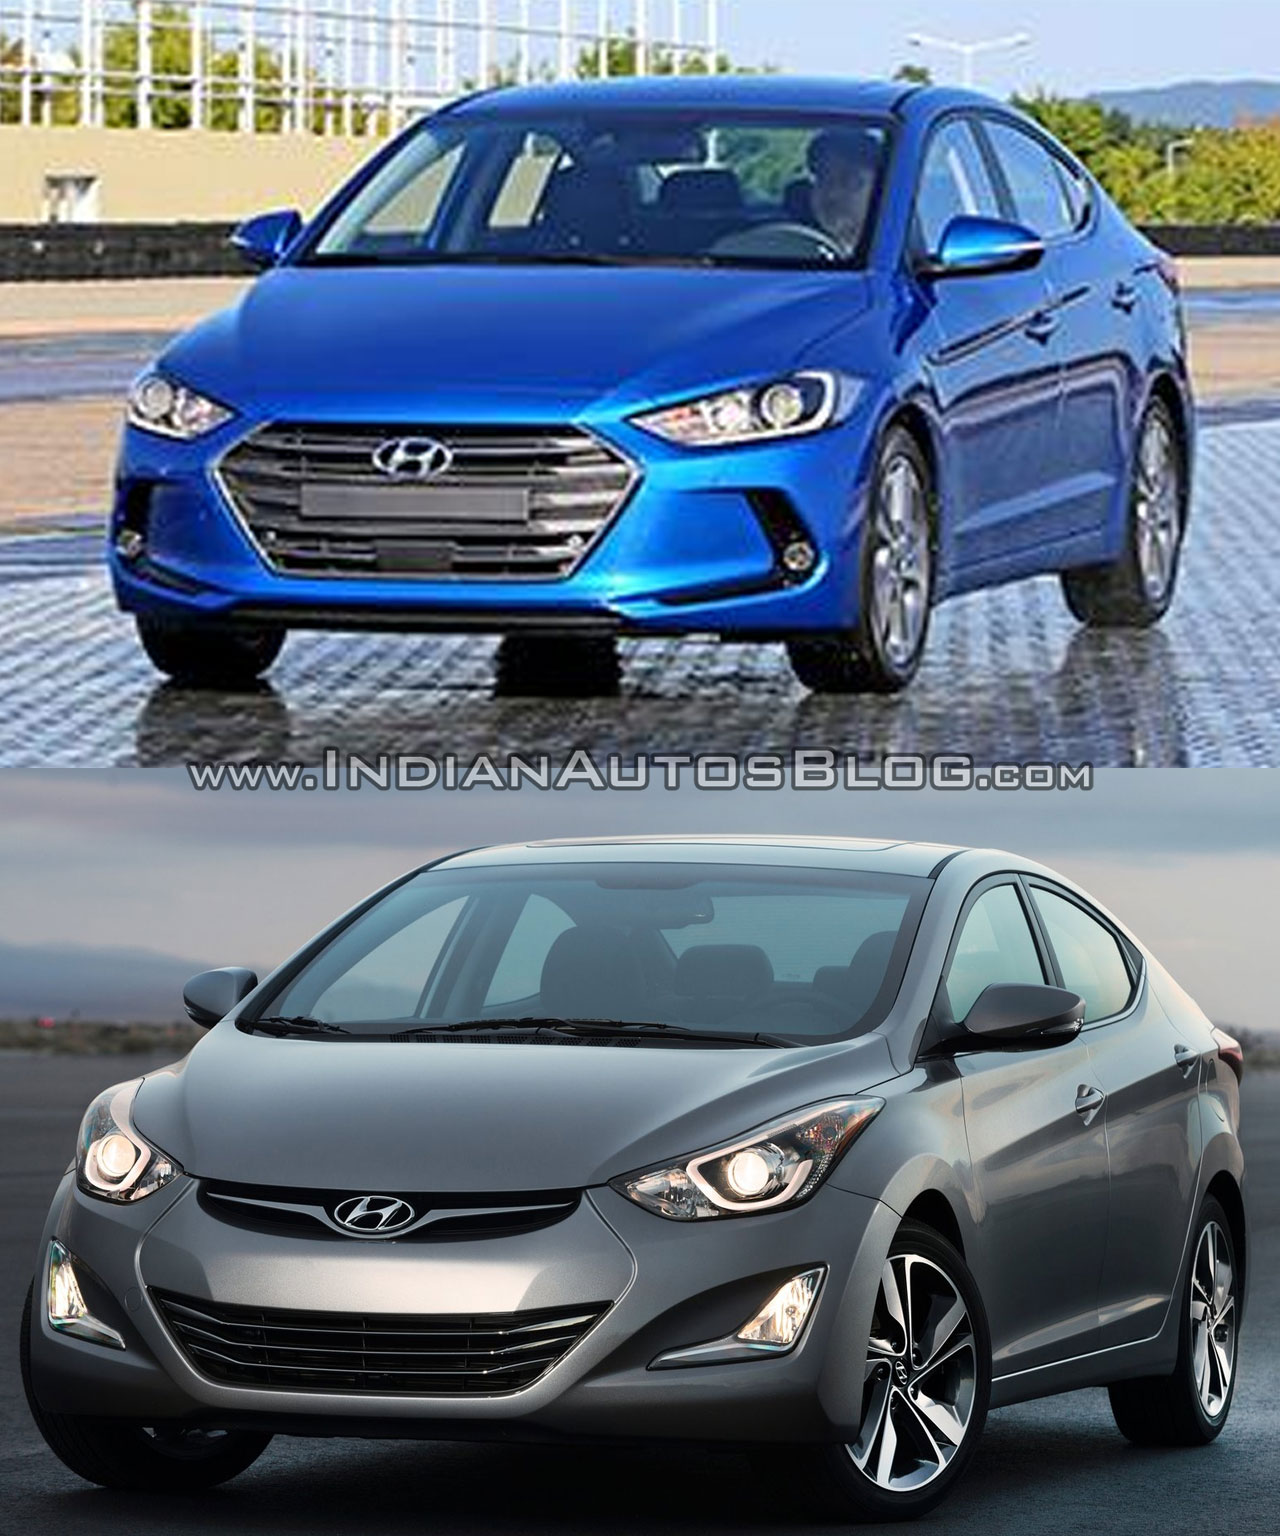 2016 Hyundai Elantra vs older model front fascia